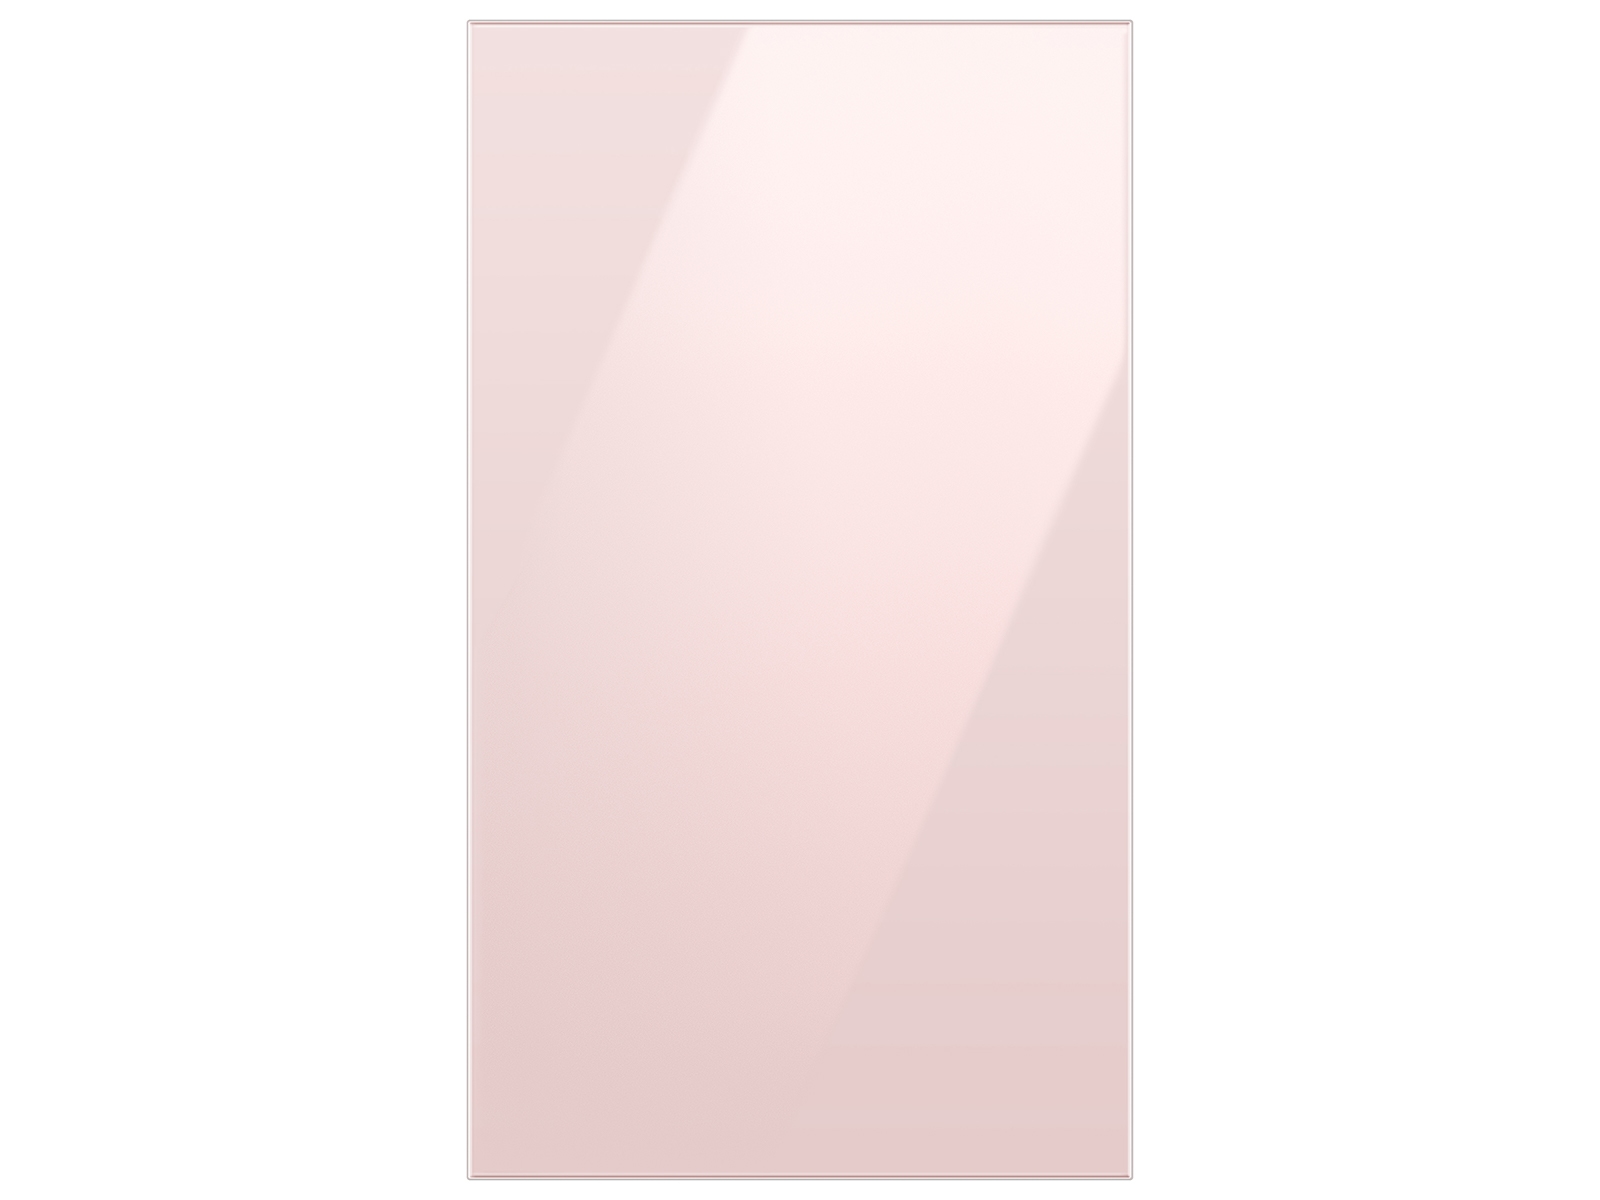 Thumbnail image of Bespoke 4-Door Flex&trade; Refrigerator Panel in Pink Glass - Bottom Panel